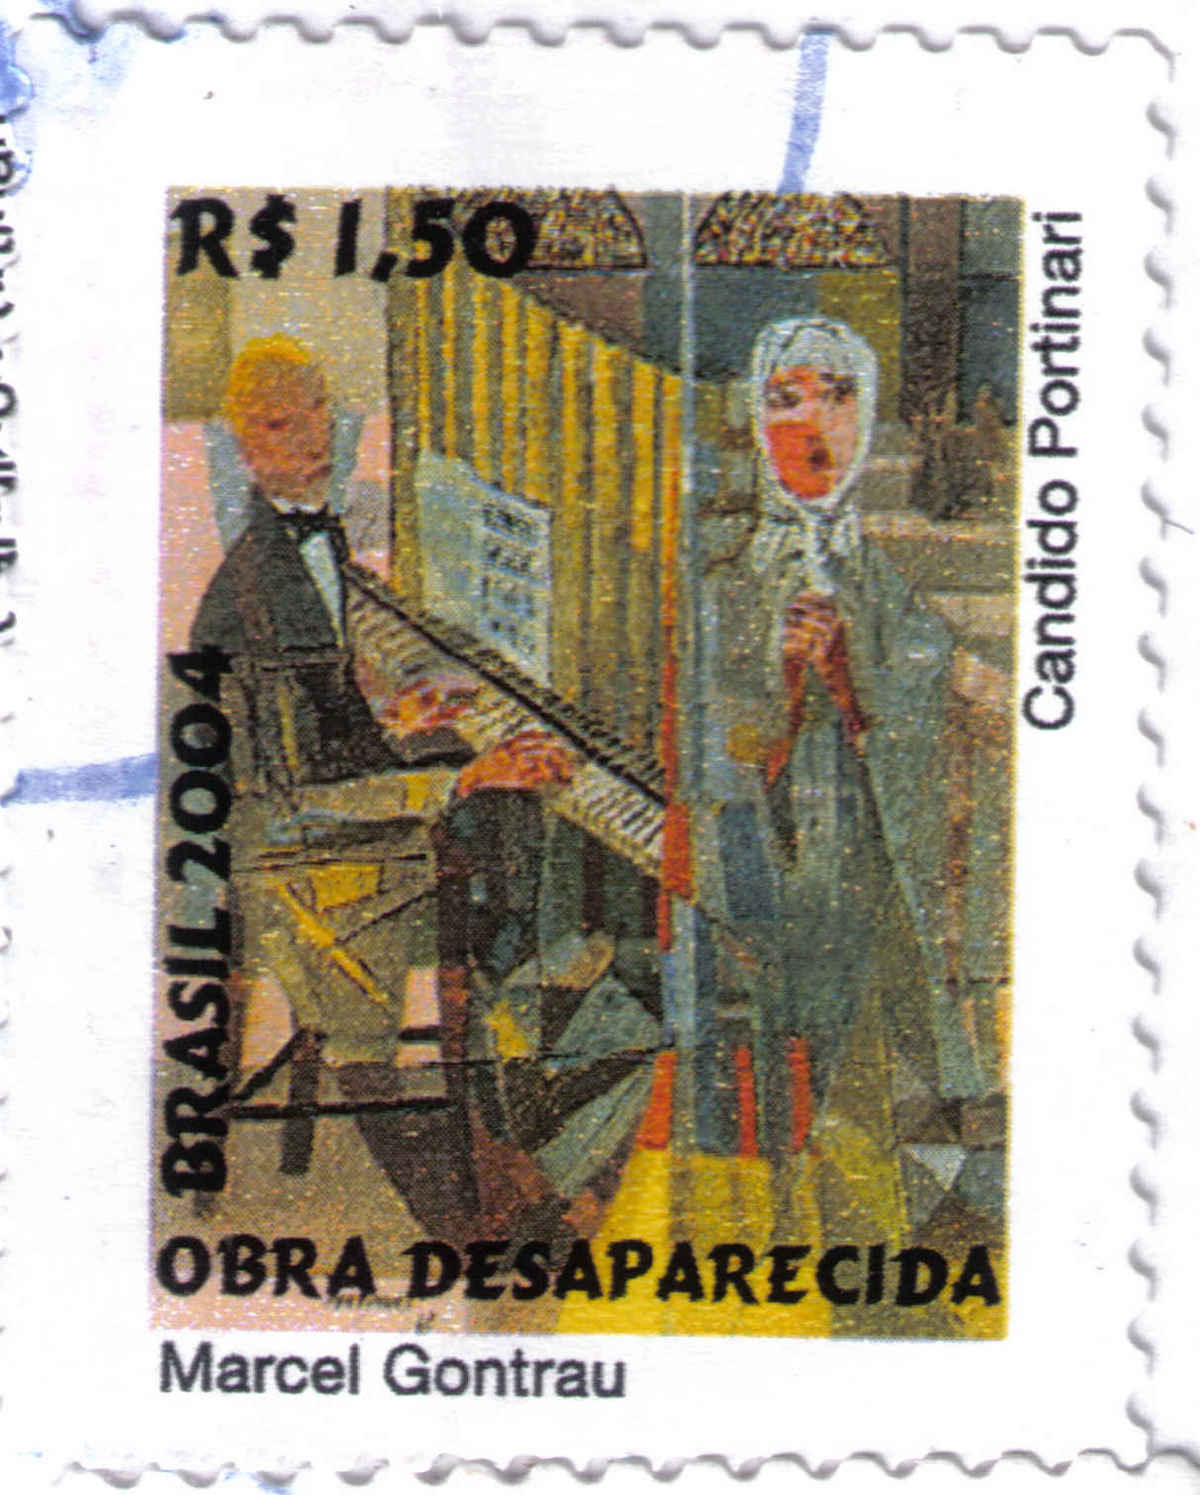 Marcel Gontrau_OBRA DESAPARECIDA_Cndido Portinari_R$ 1,50_ Brasil 2004.jpg